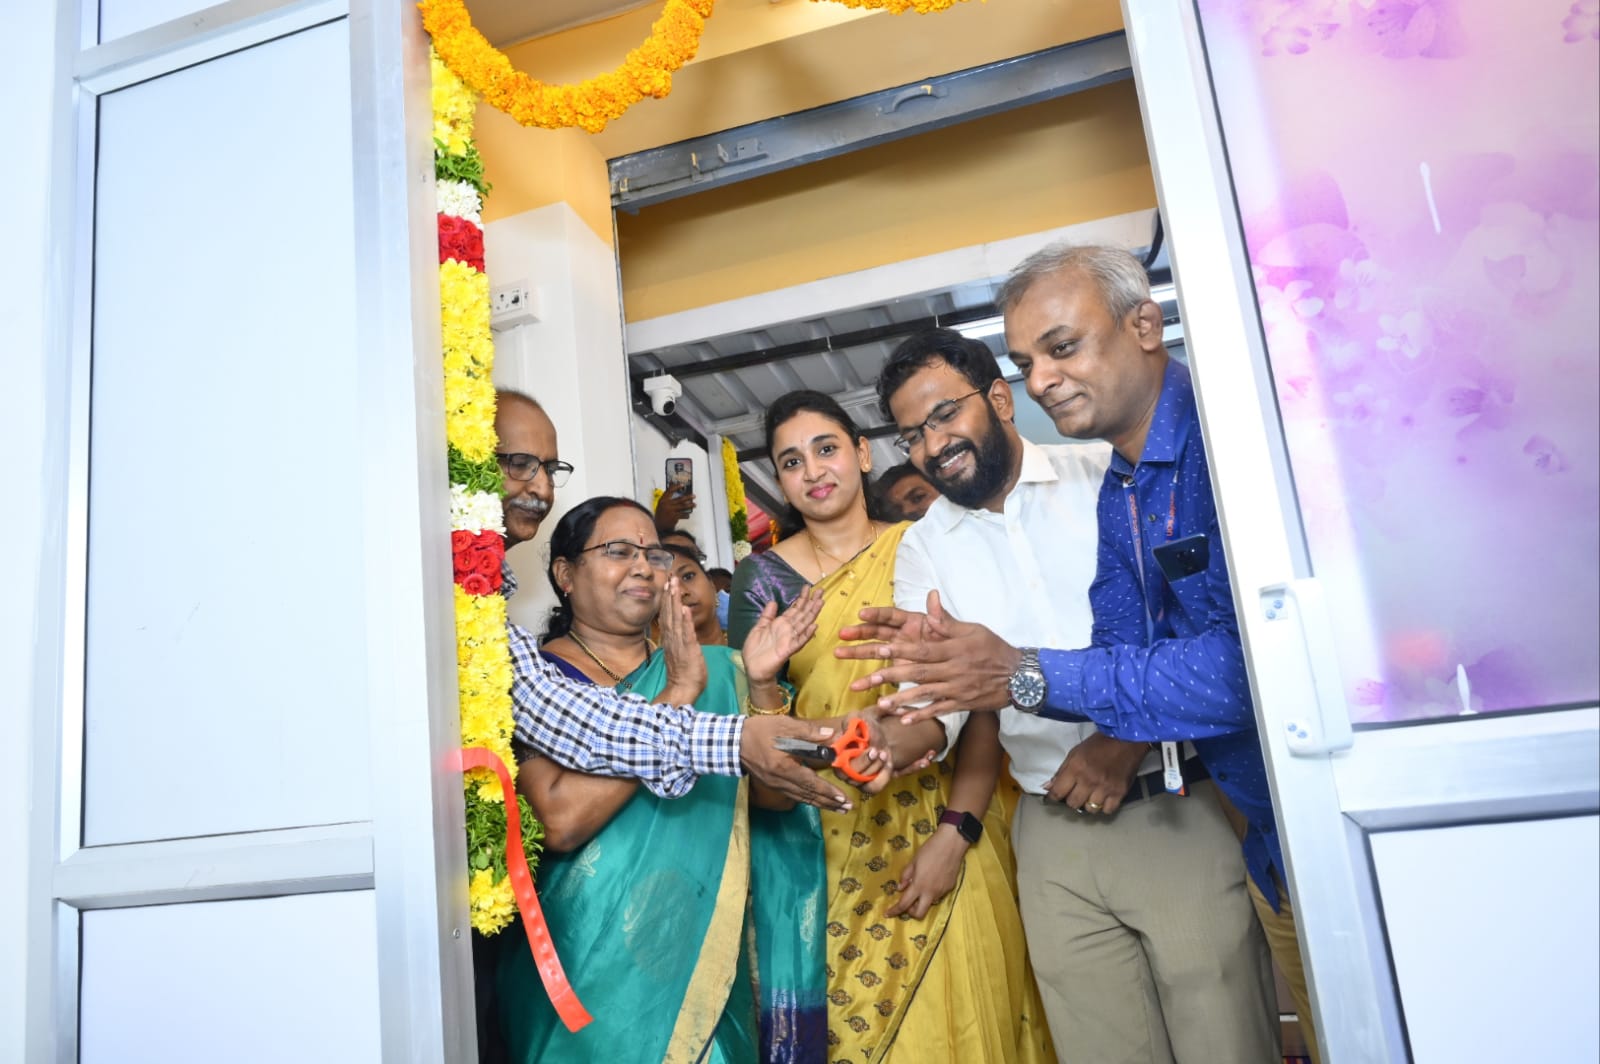 Guests at the opening of the new Anderson Diagnostic Center at Periyar Nagar.